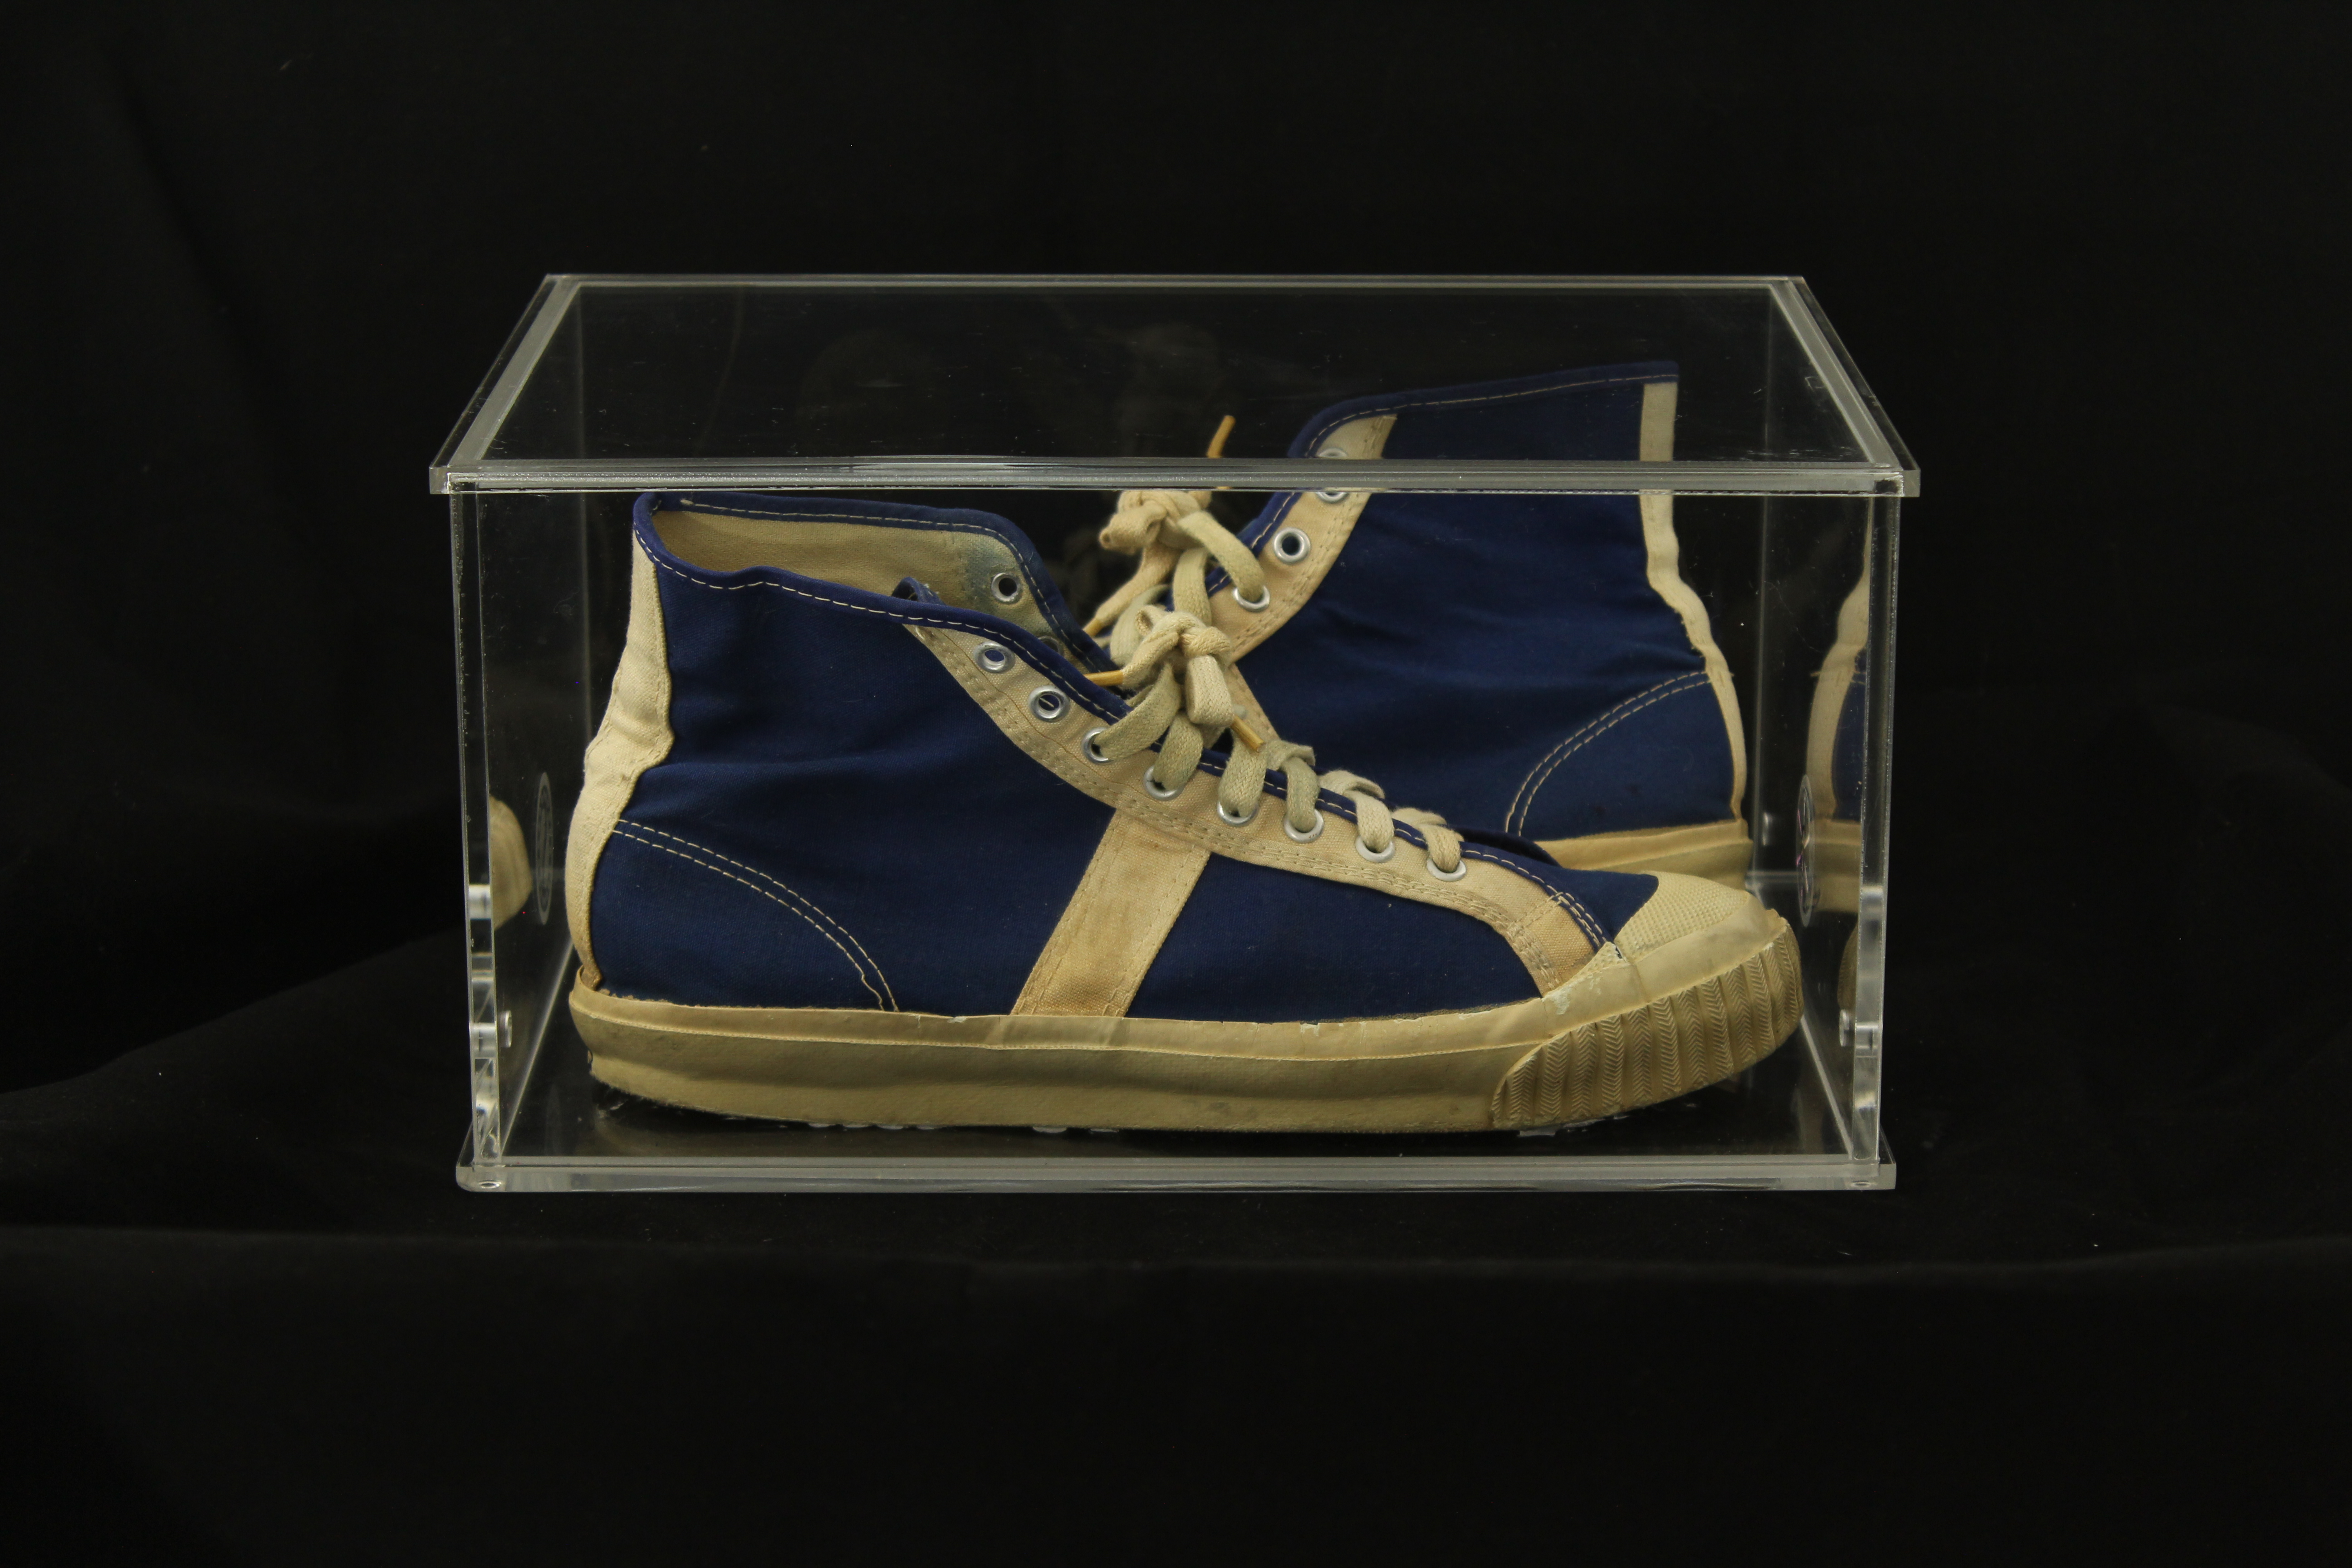 image of a vintage pair of sneakers